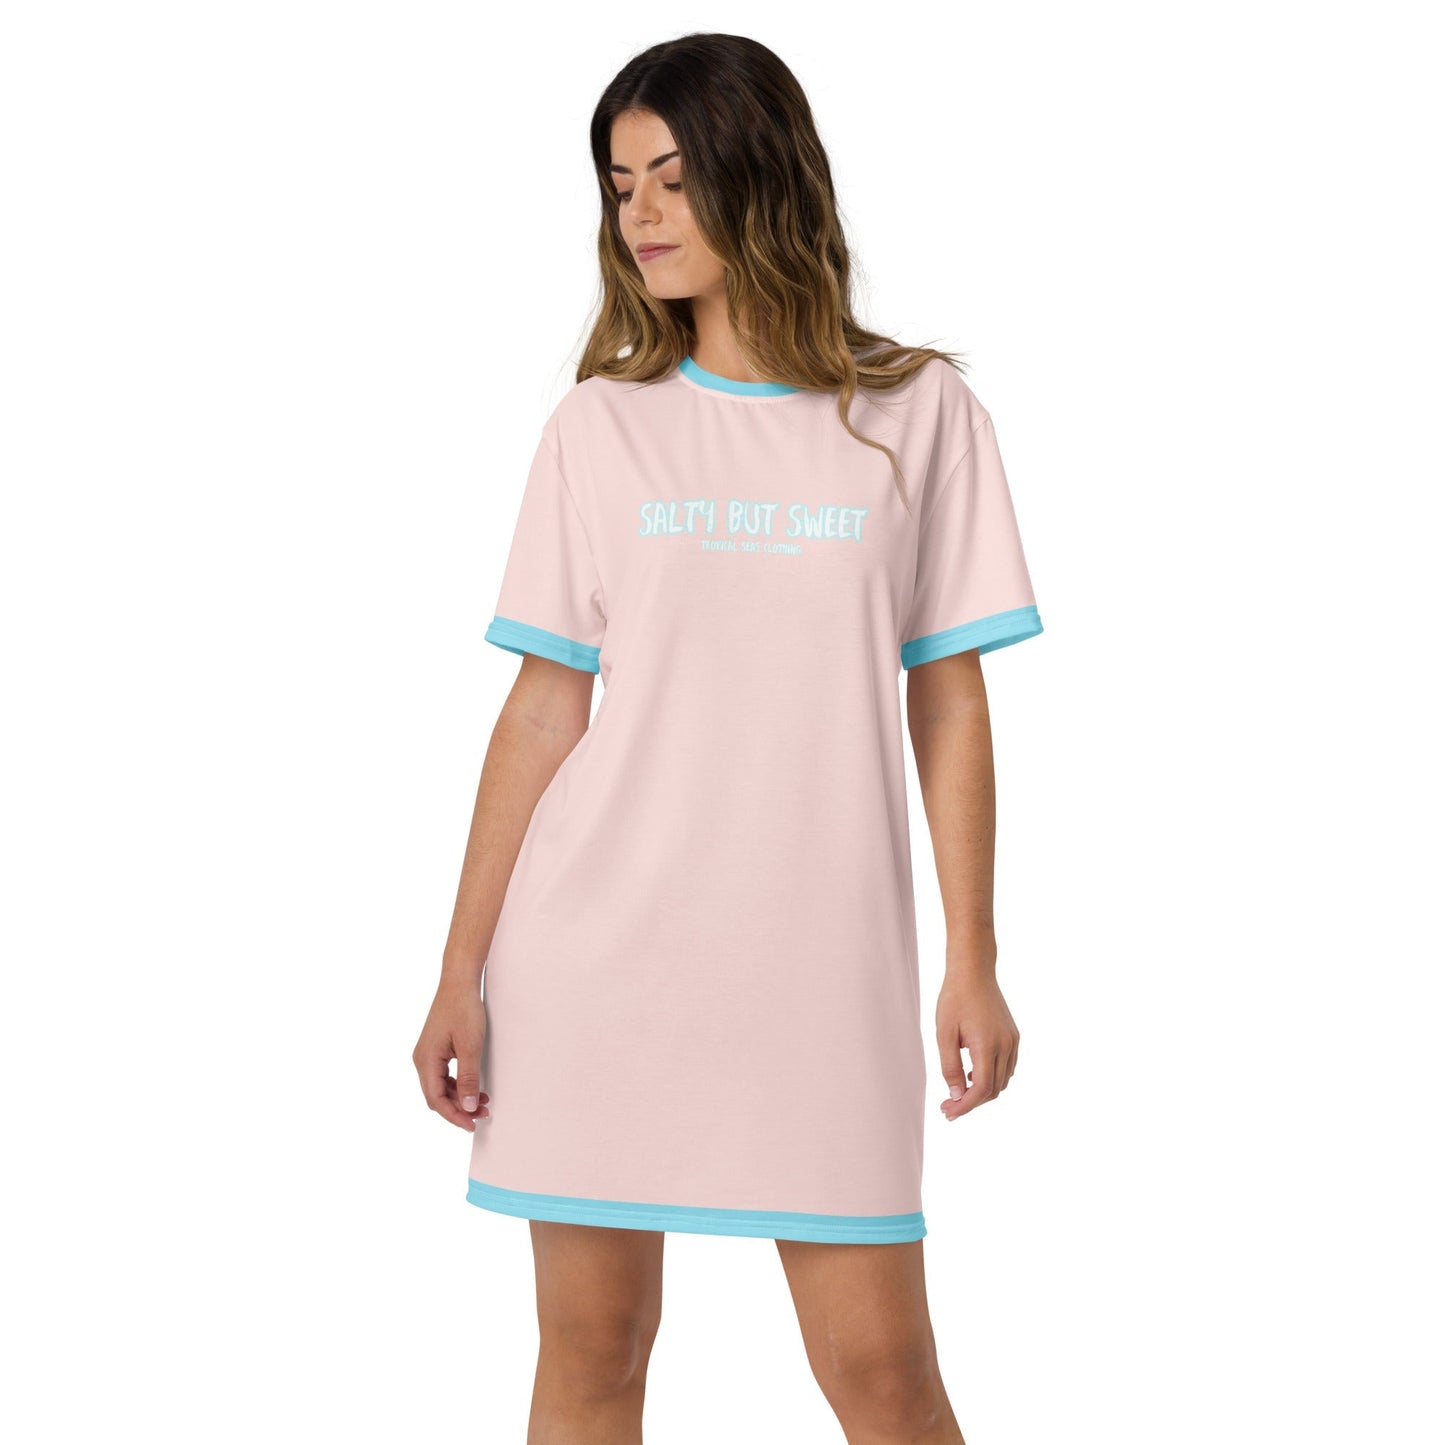 Women's Salty but Sweet T-shirt dress - Tropical Seas Clothing 